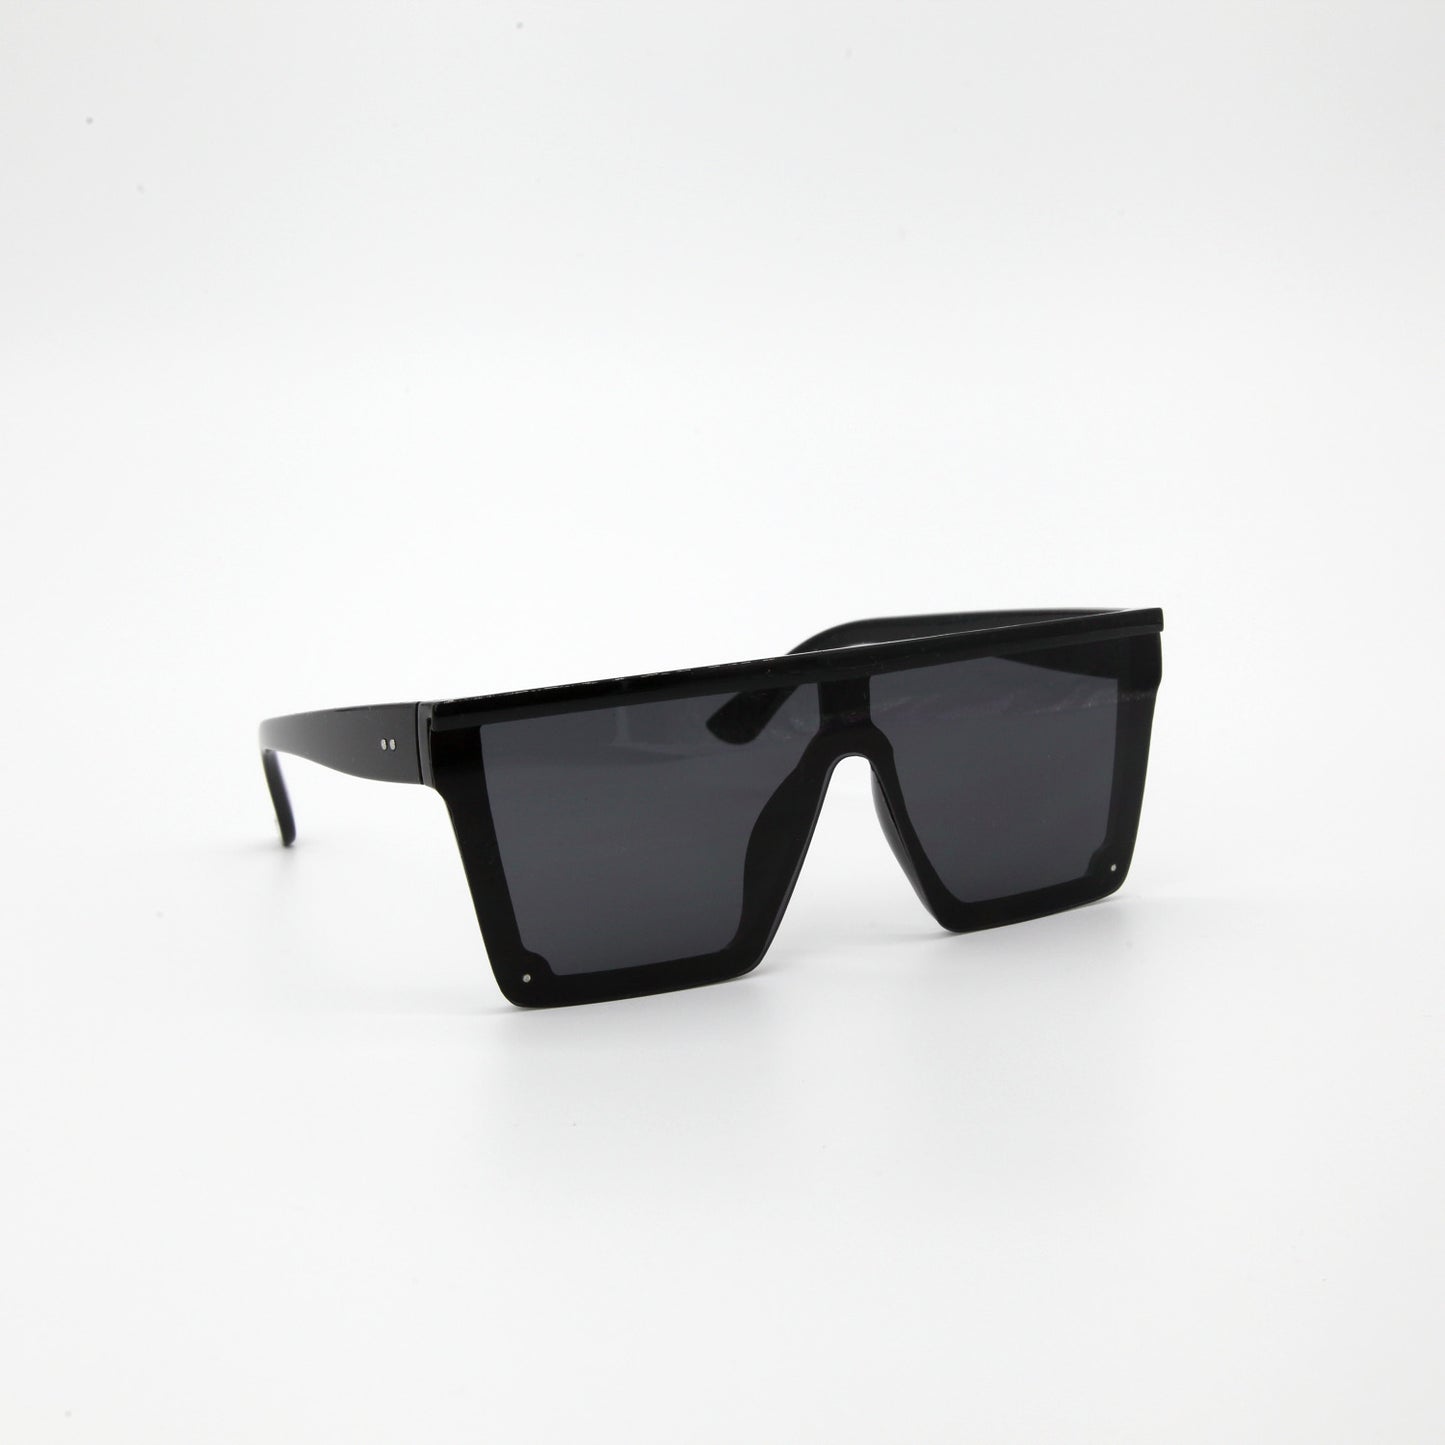 Parker Sunglasses in Black